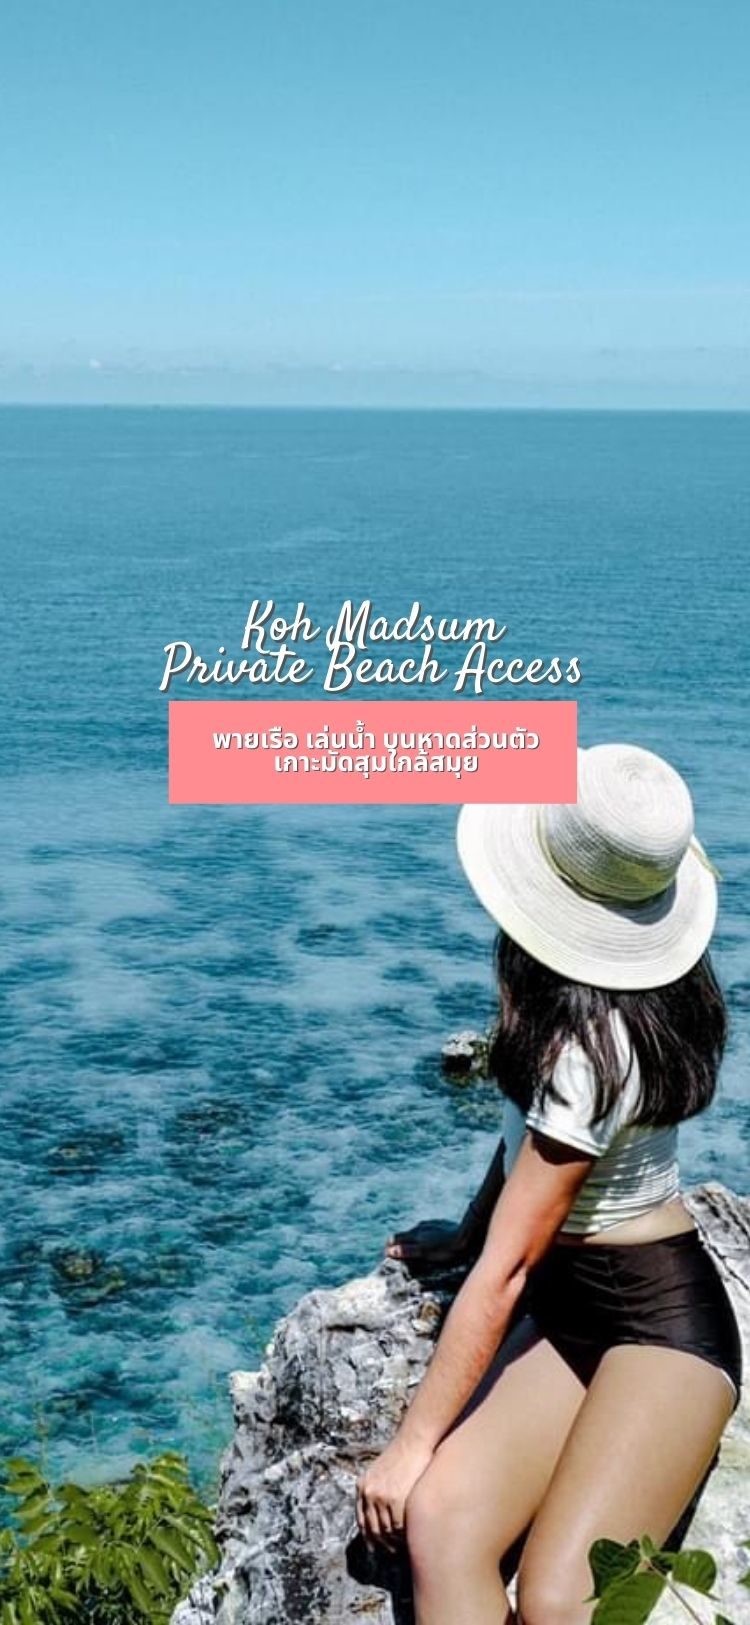 gojo madsum private beach